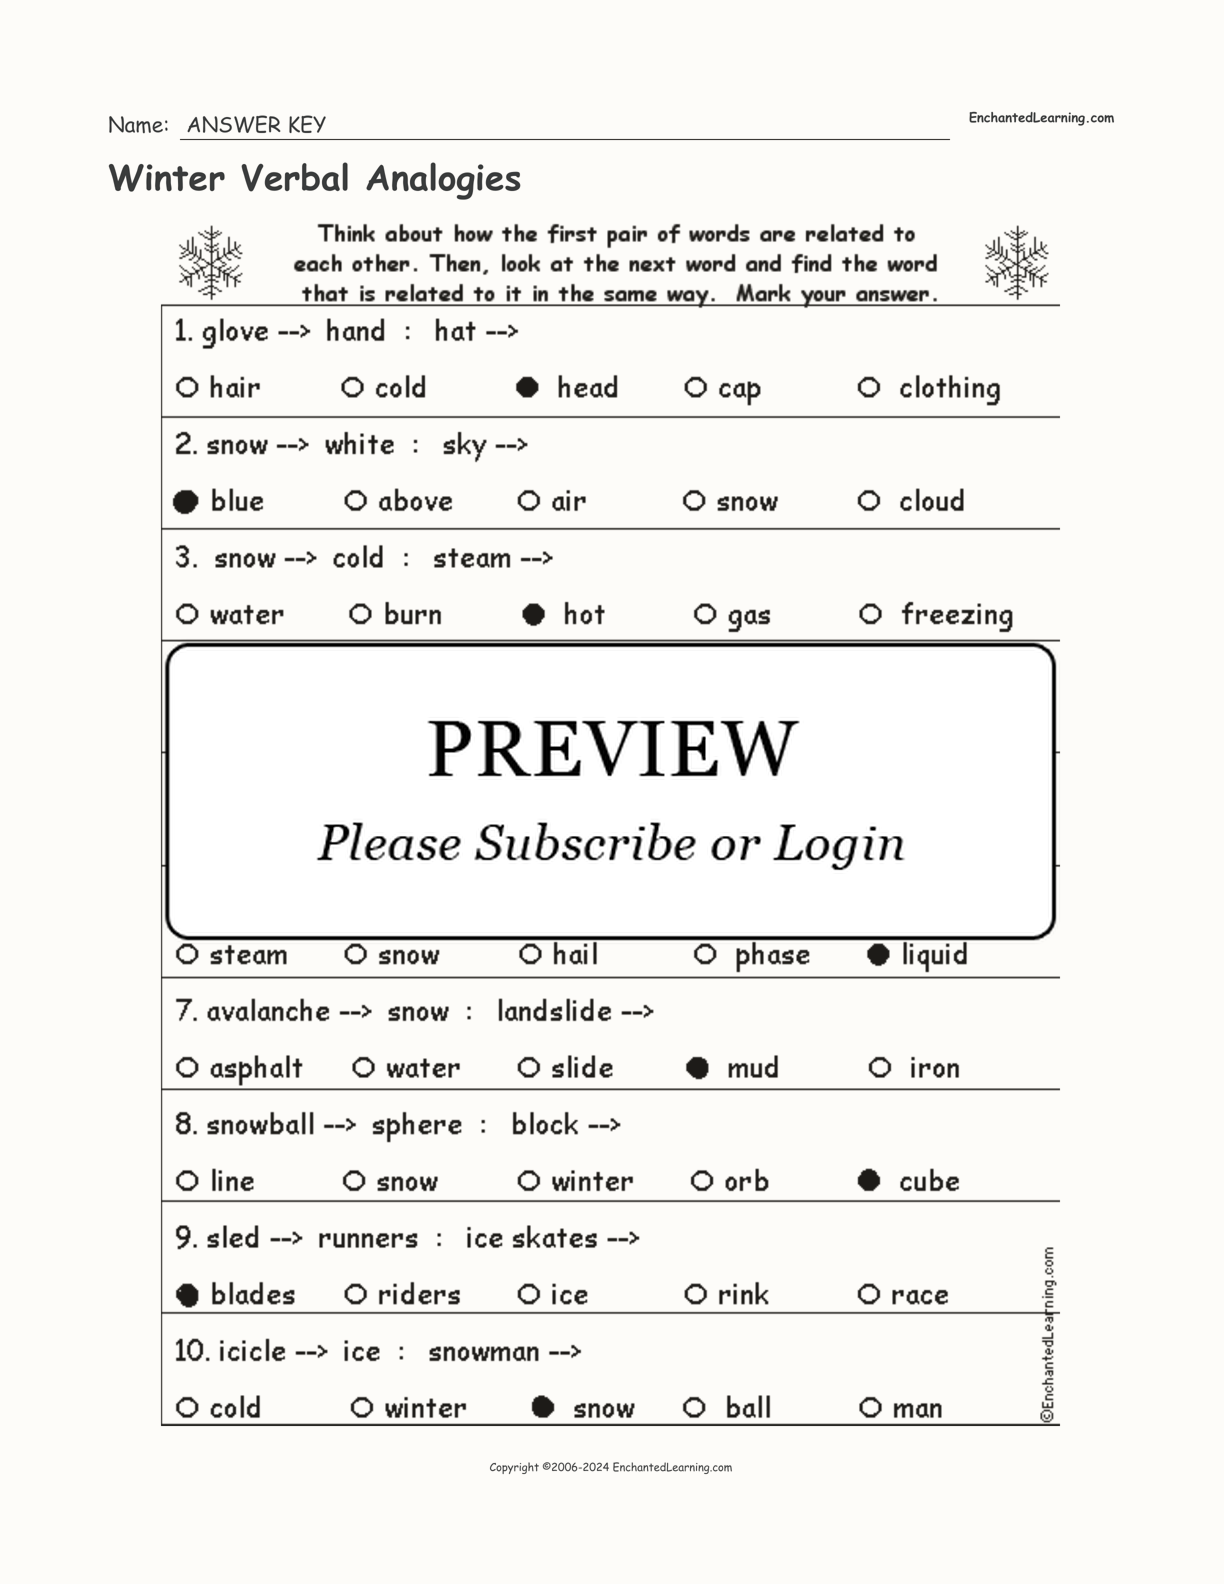 Winter Verbal Analogies interactive worksheet page 2